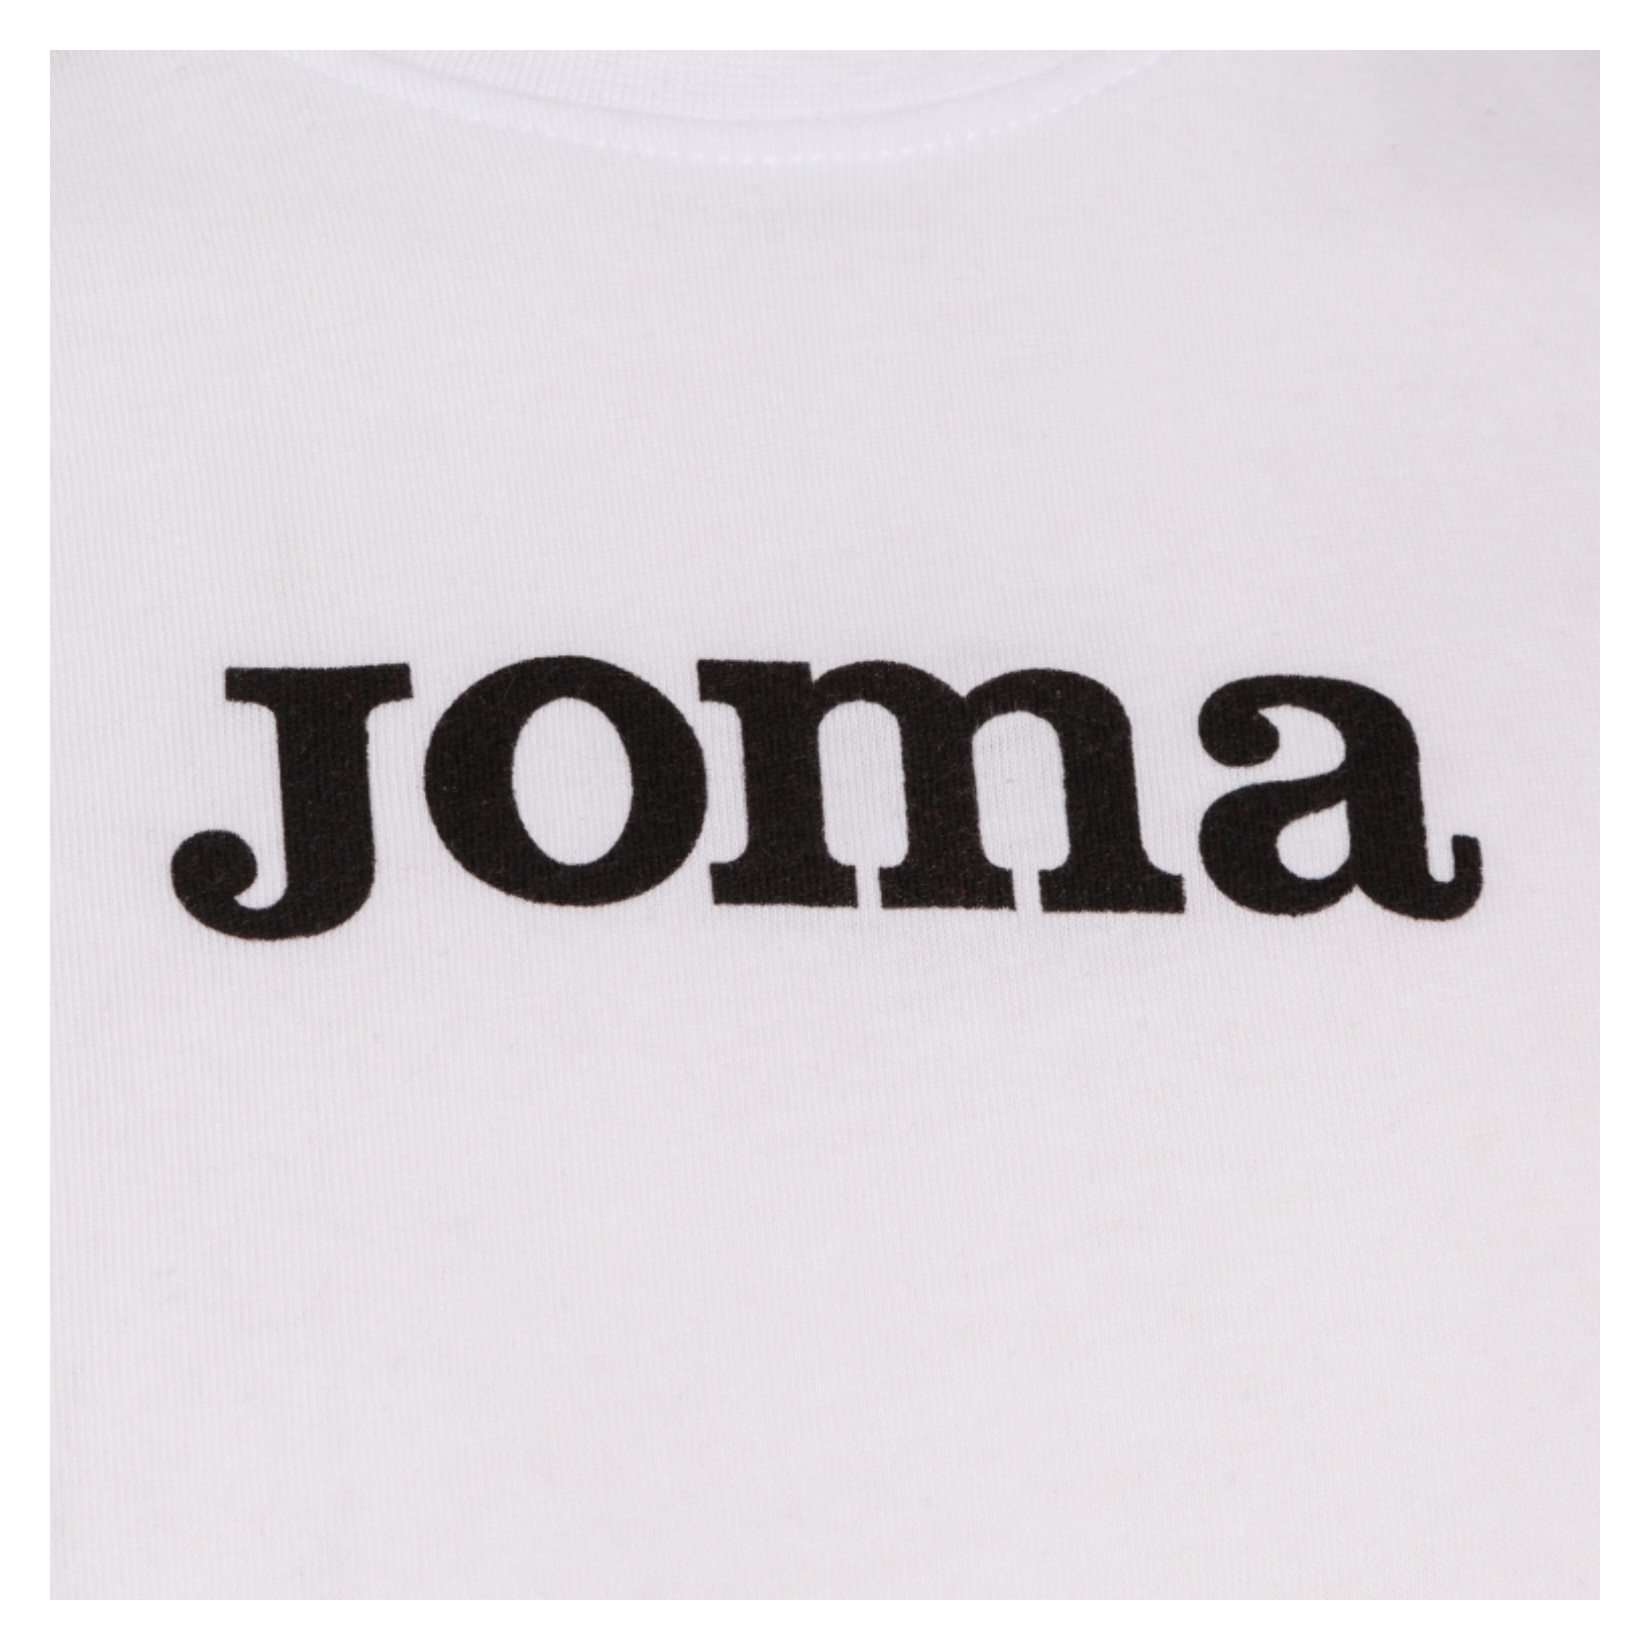 Joma Lille Cotton Short-Sleeve T-Shirt